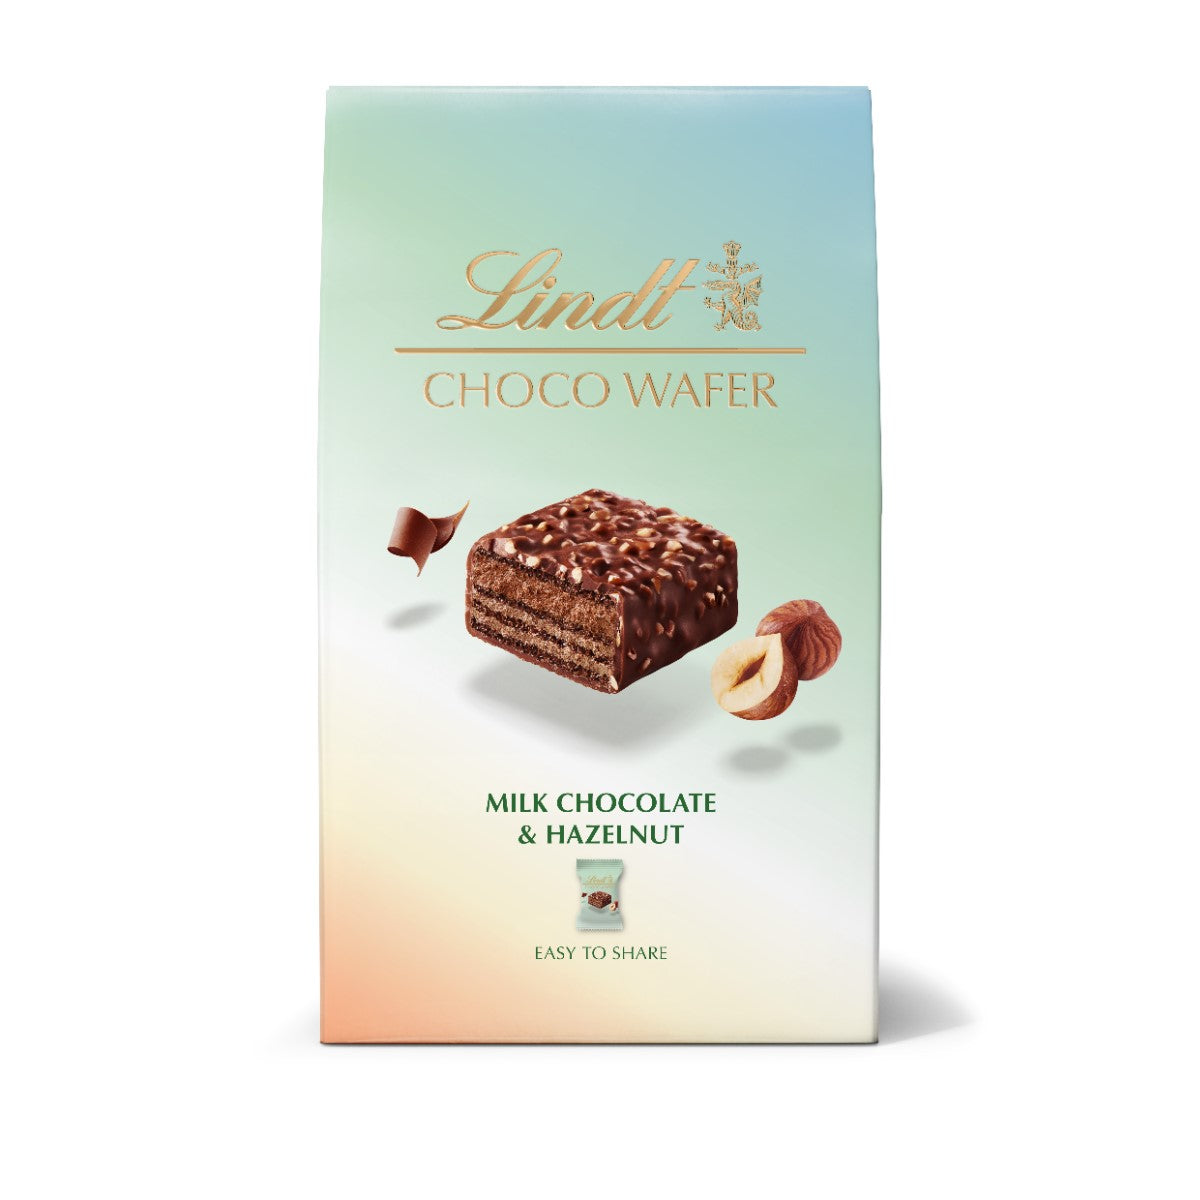 Lindt CHOCO WAFER Milk Chocolate & Hazelnut Sharing Box - 135g